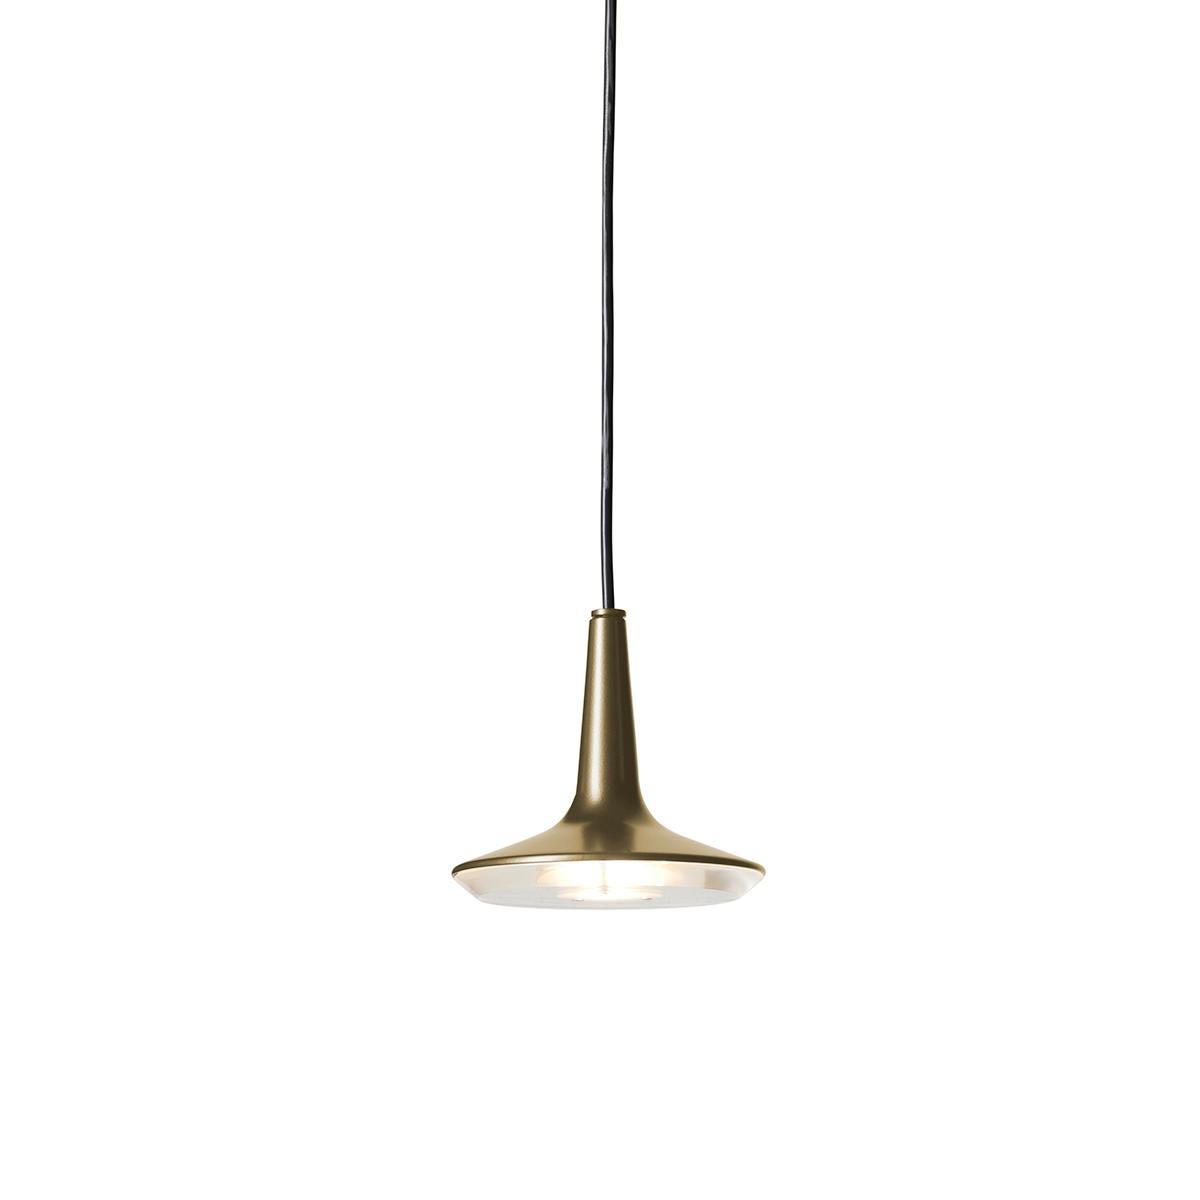 Italian Francesco Rota Suspension Lamp 'Kin' 478 Satin Gold by Oluce